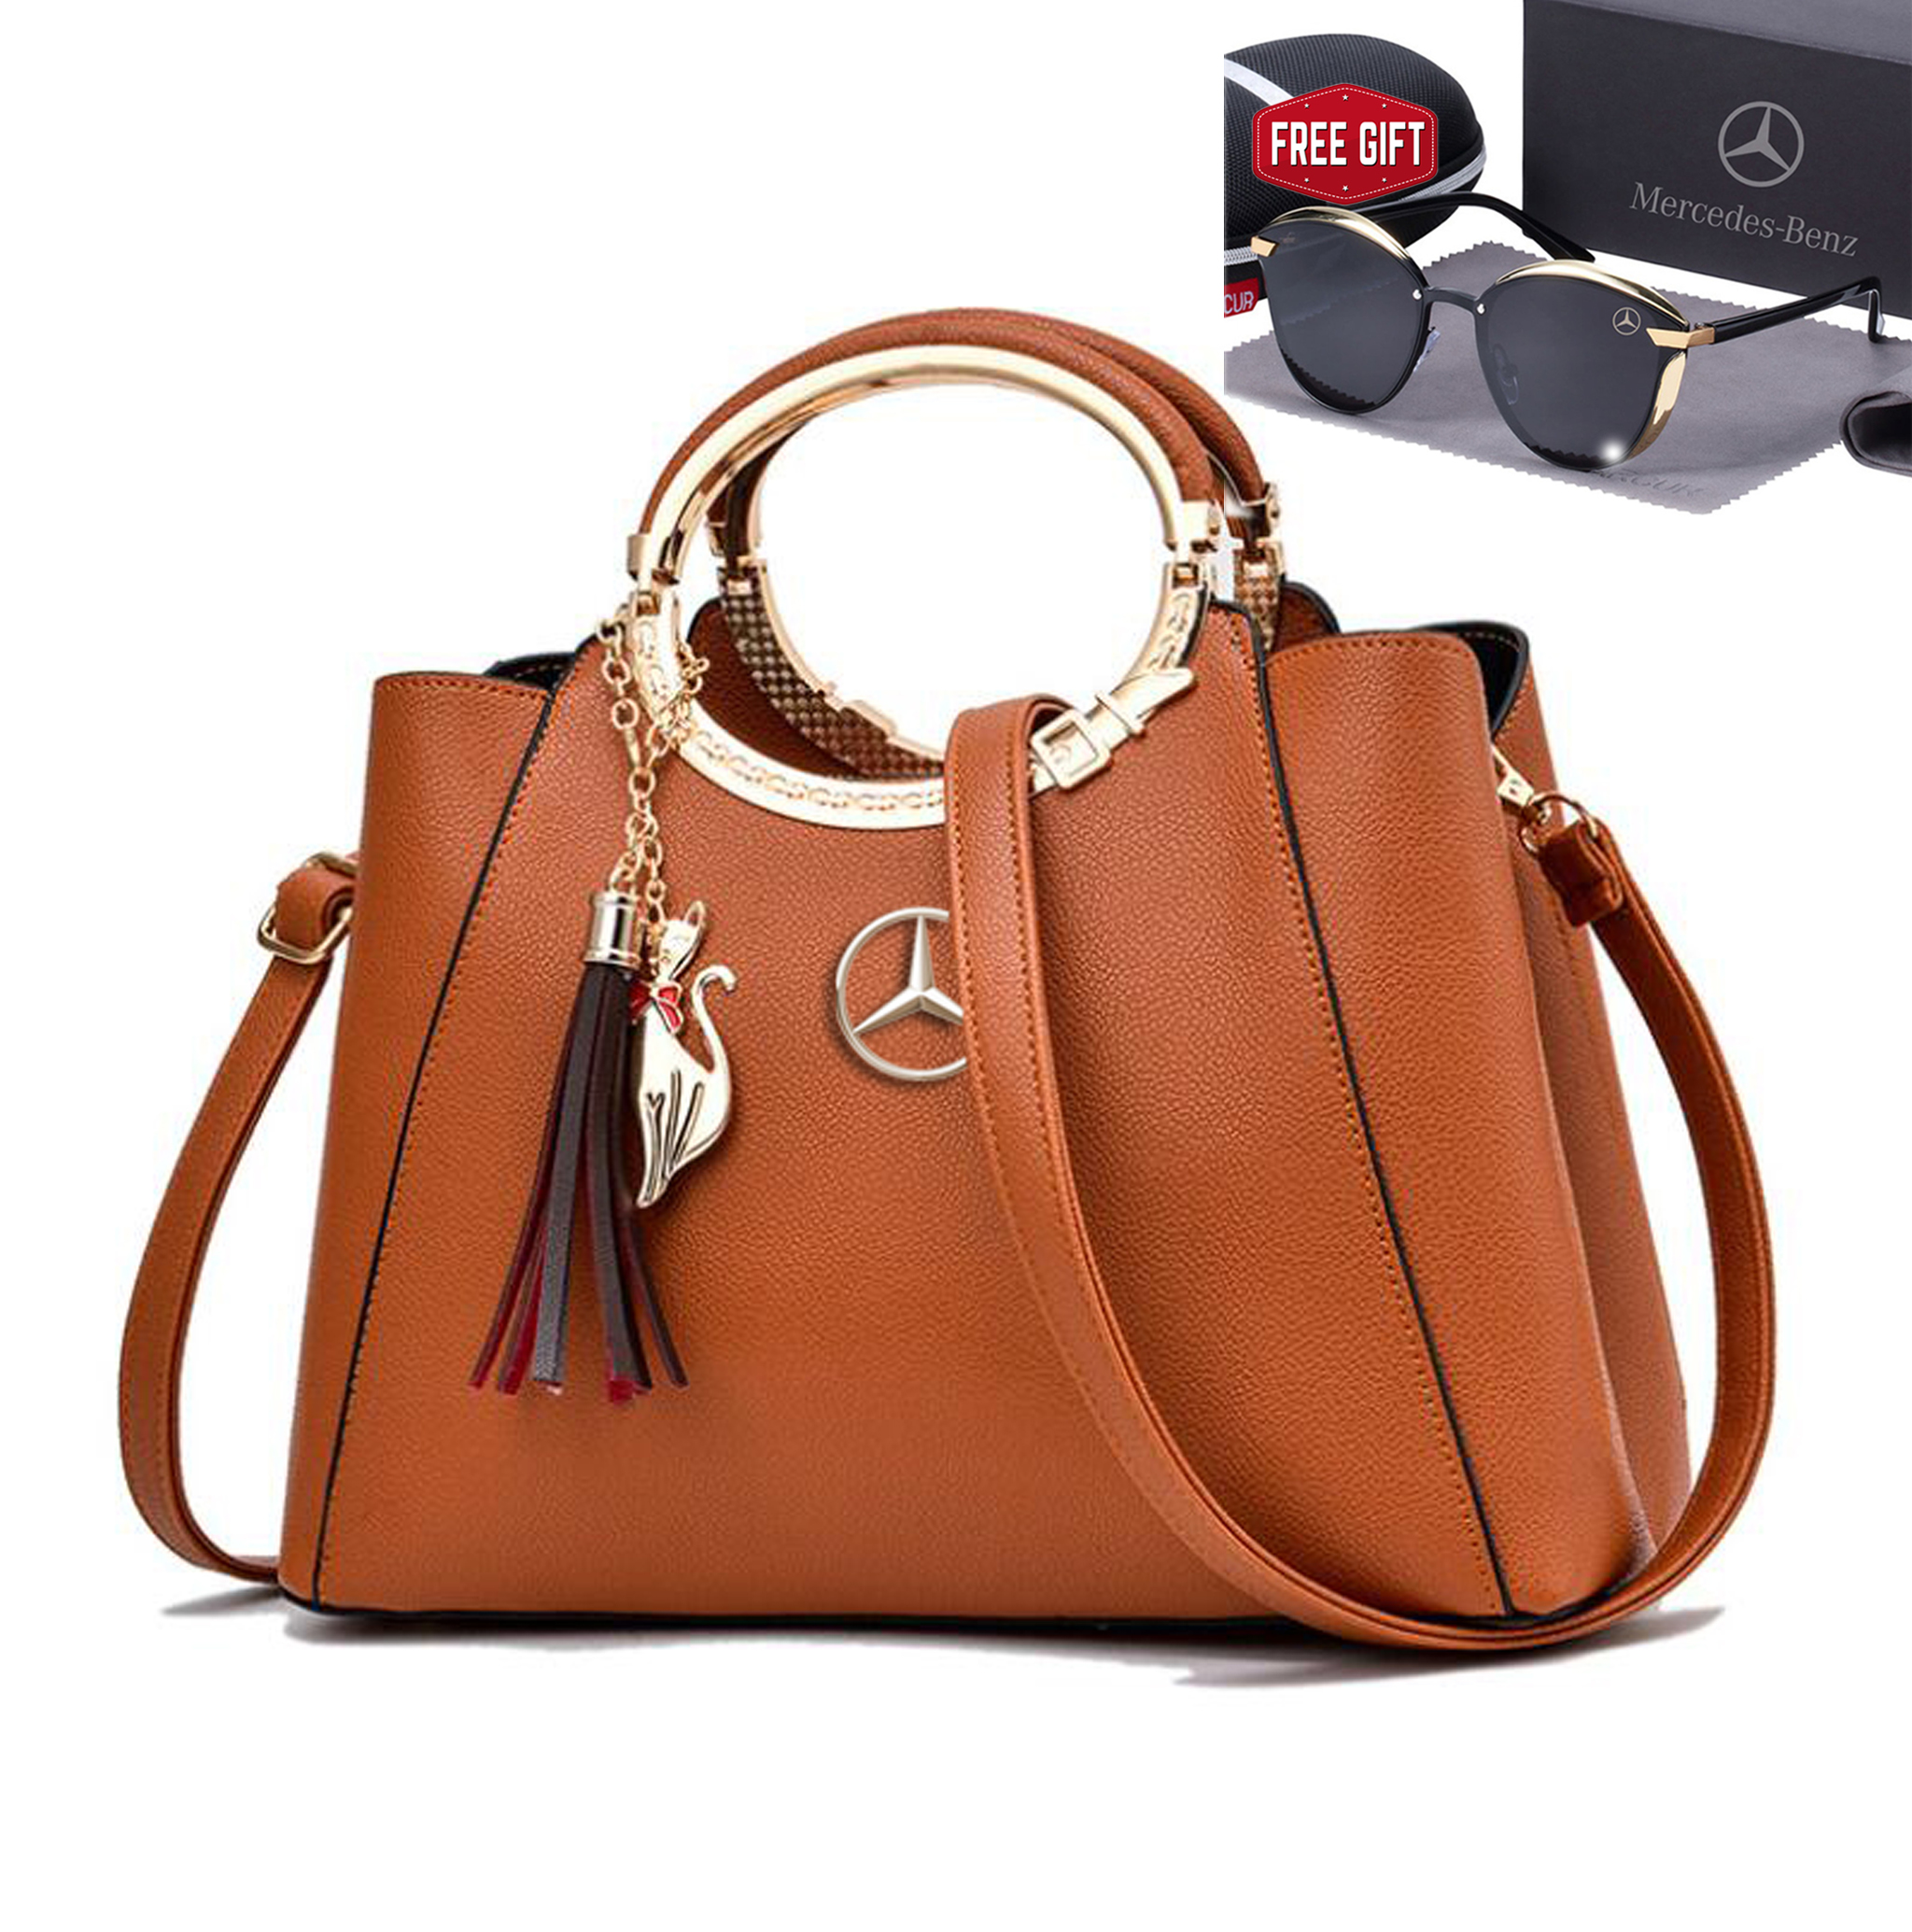 2021 Mercedes Benz Summer Handbag With Free Glasses Gift SOOZ